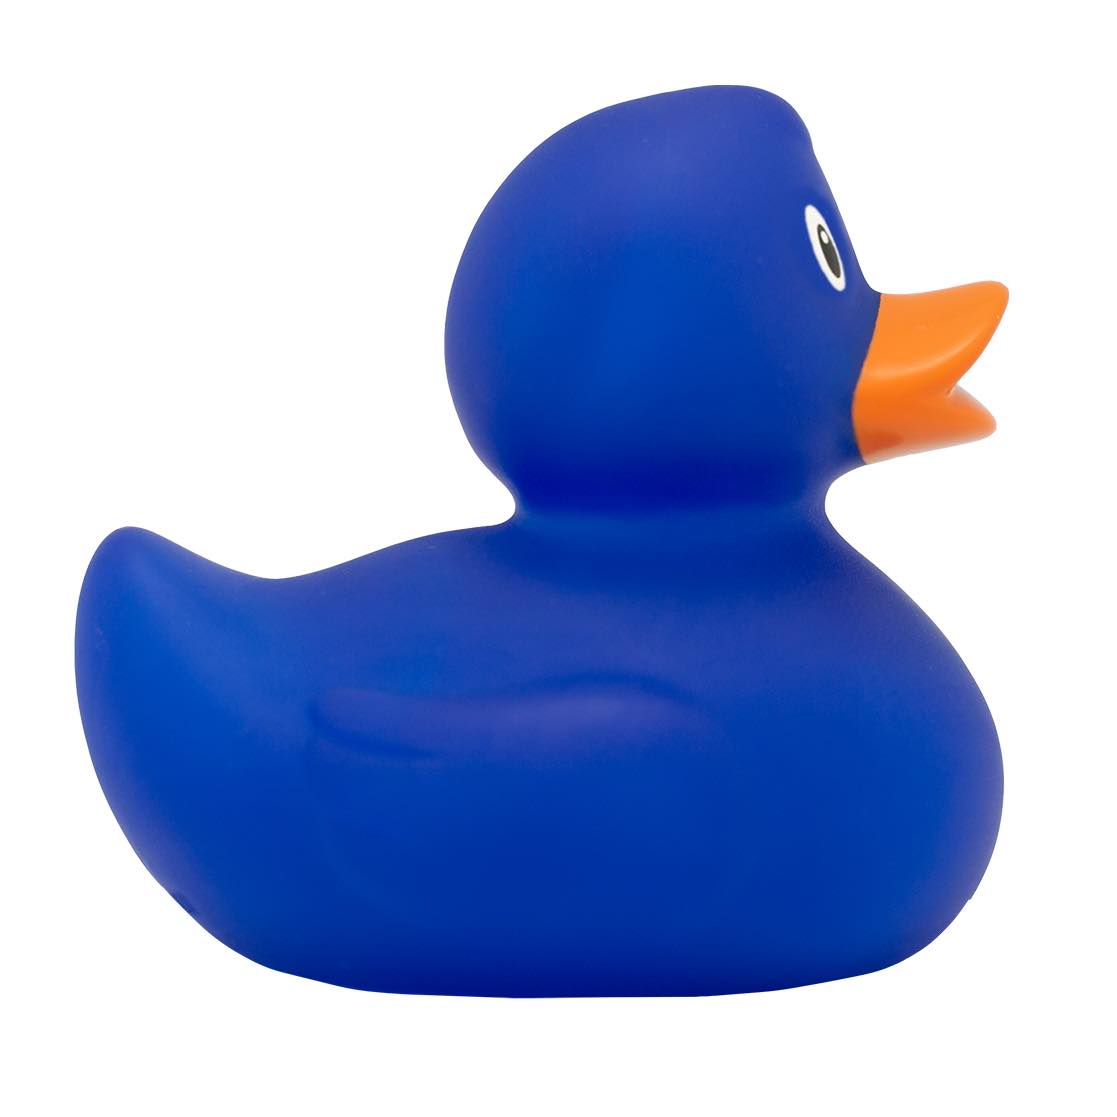 Blue Rubber Duck | Buy premium rubber ducks online - world wide delivery!